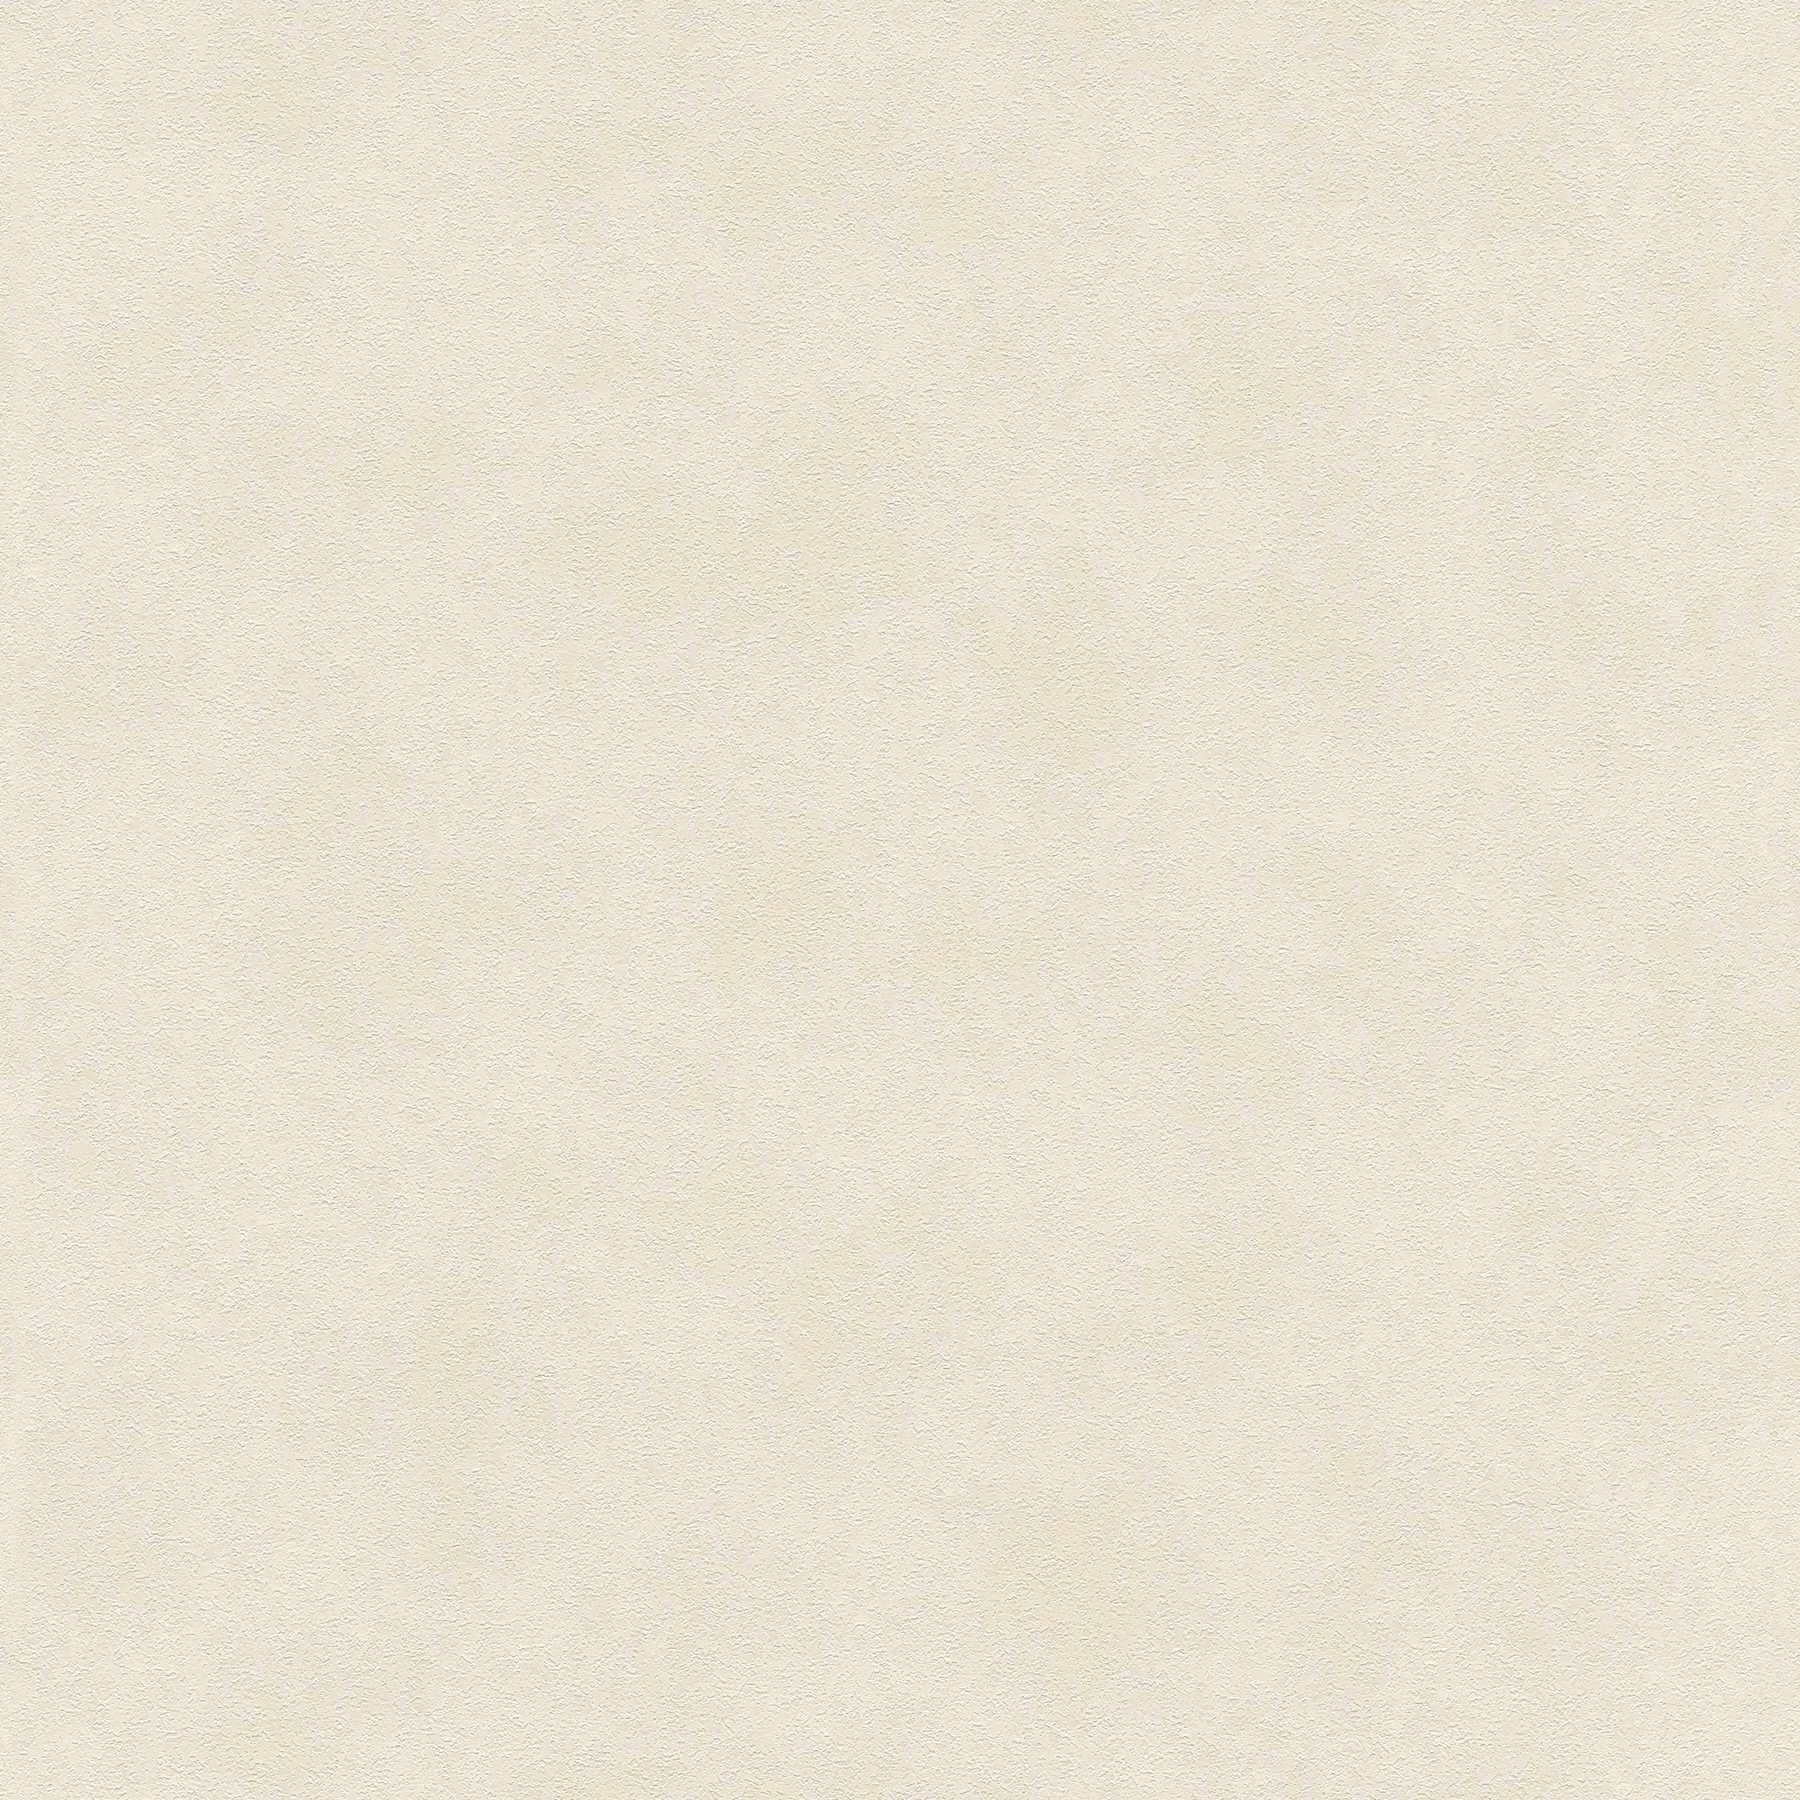 Carta da parati beige crema con effetto texture, tinta unita e seta opaca
